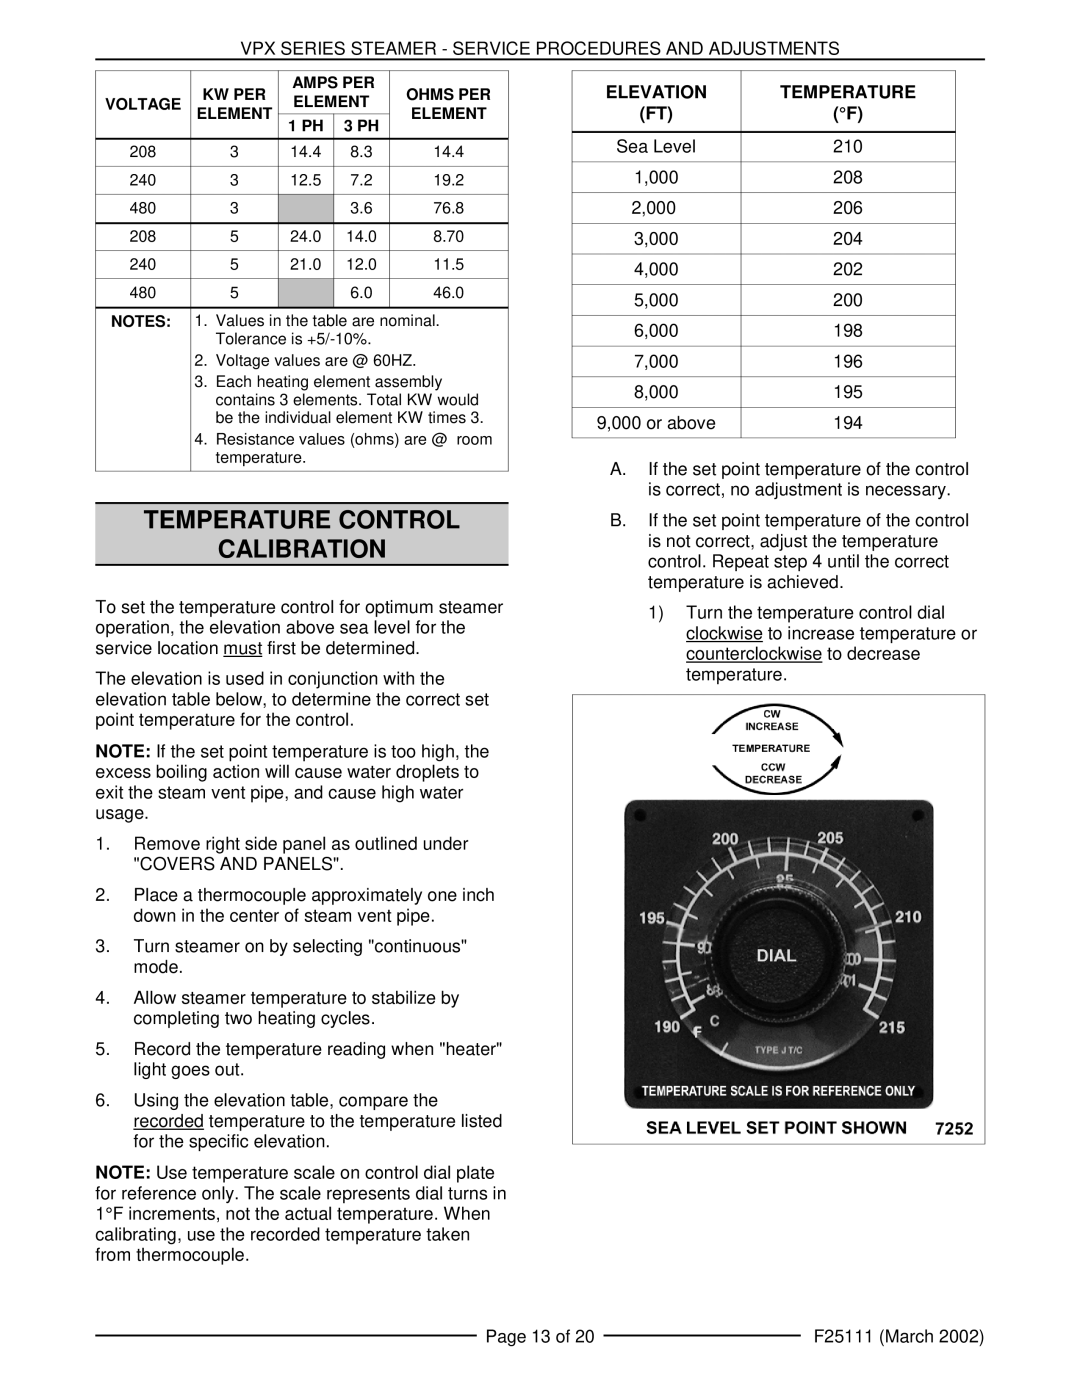 Vulcan-Hart VPX5 126588, VPX3 126586 manual Temperature Control Calibration, Elevation 